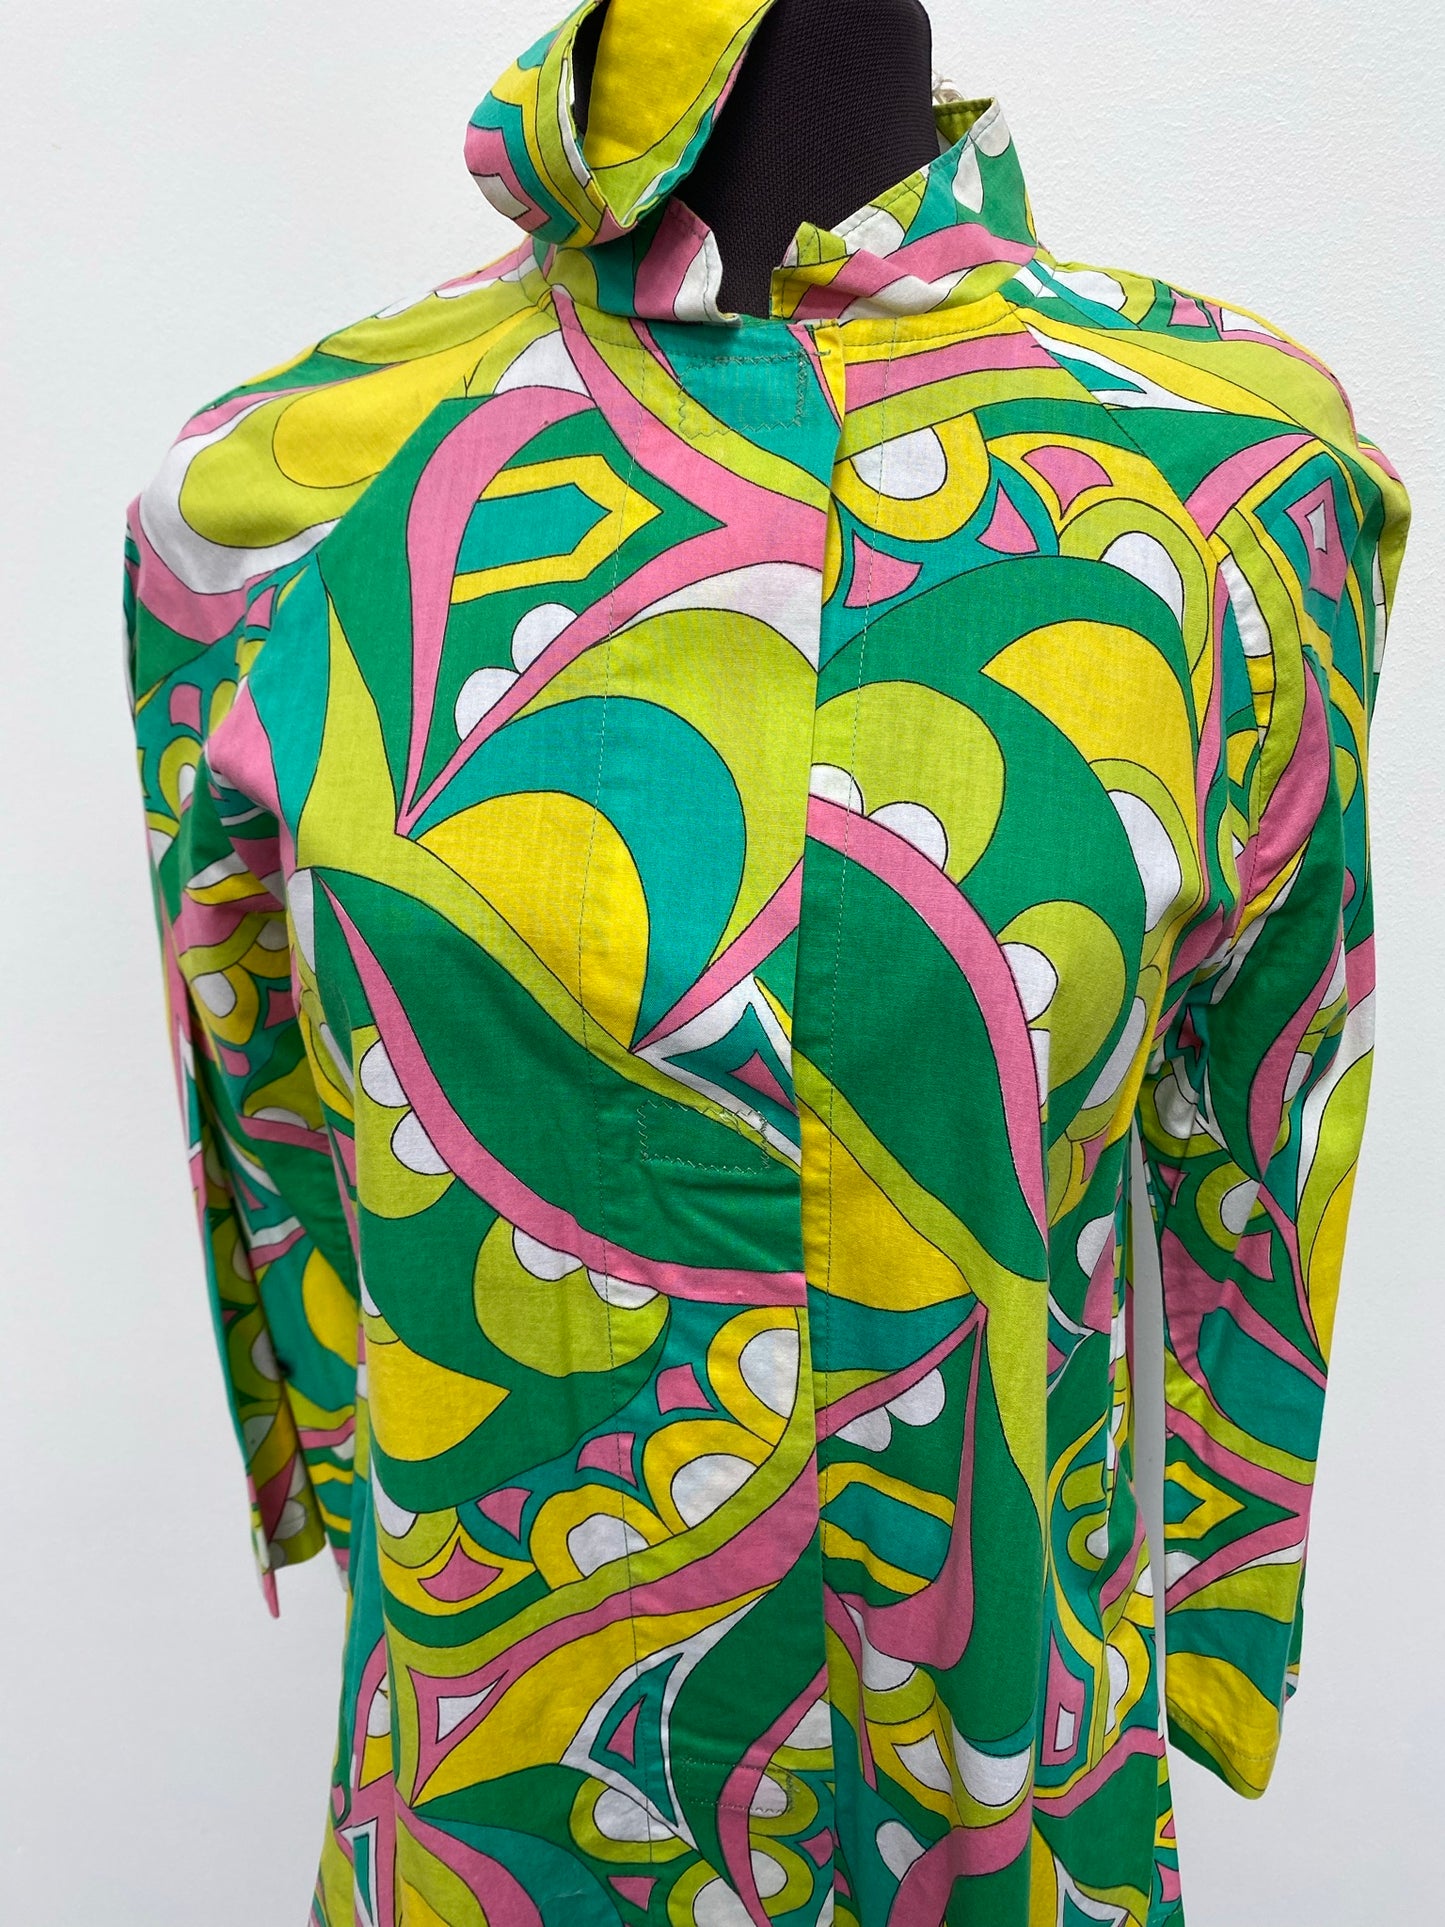 Ladies 70s style Pop Multi Coloured Shirt Small/Medium - Ex Hire Fancy Dress Costumes